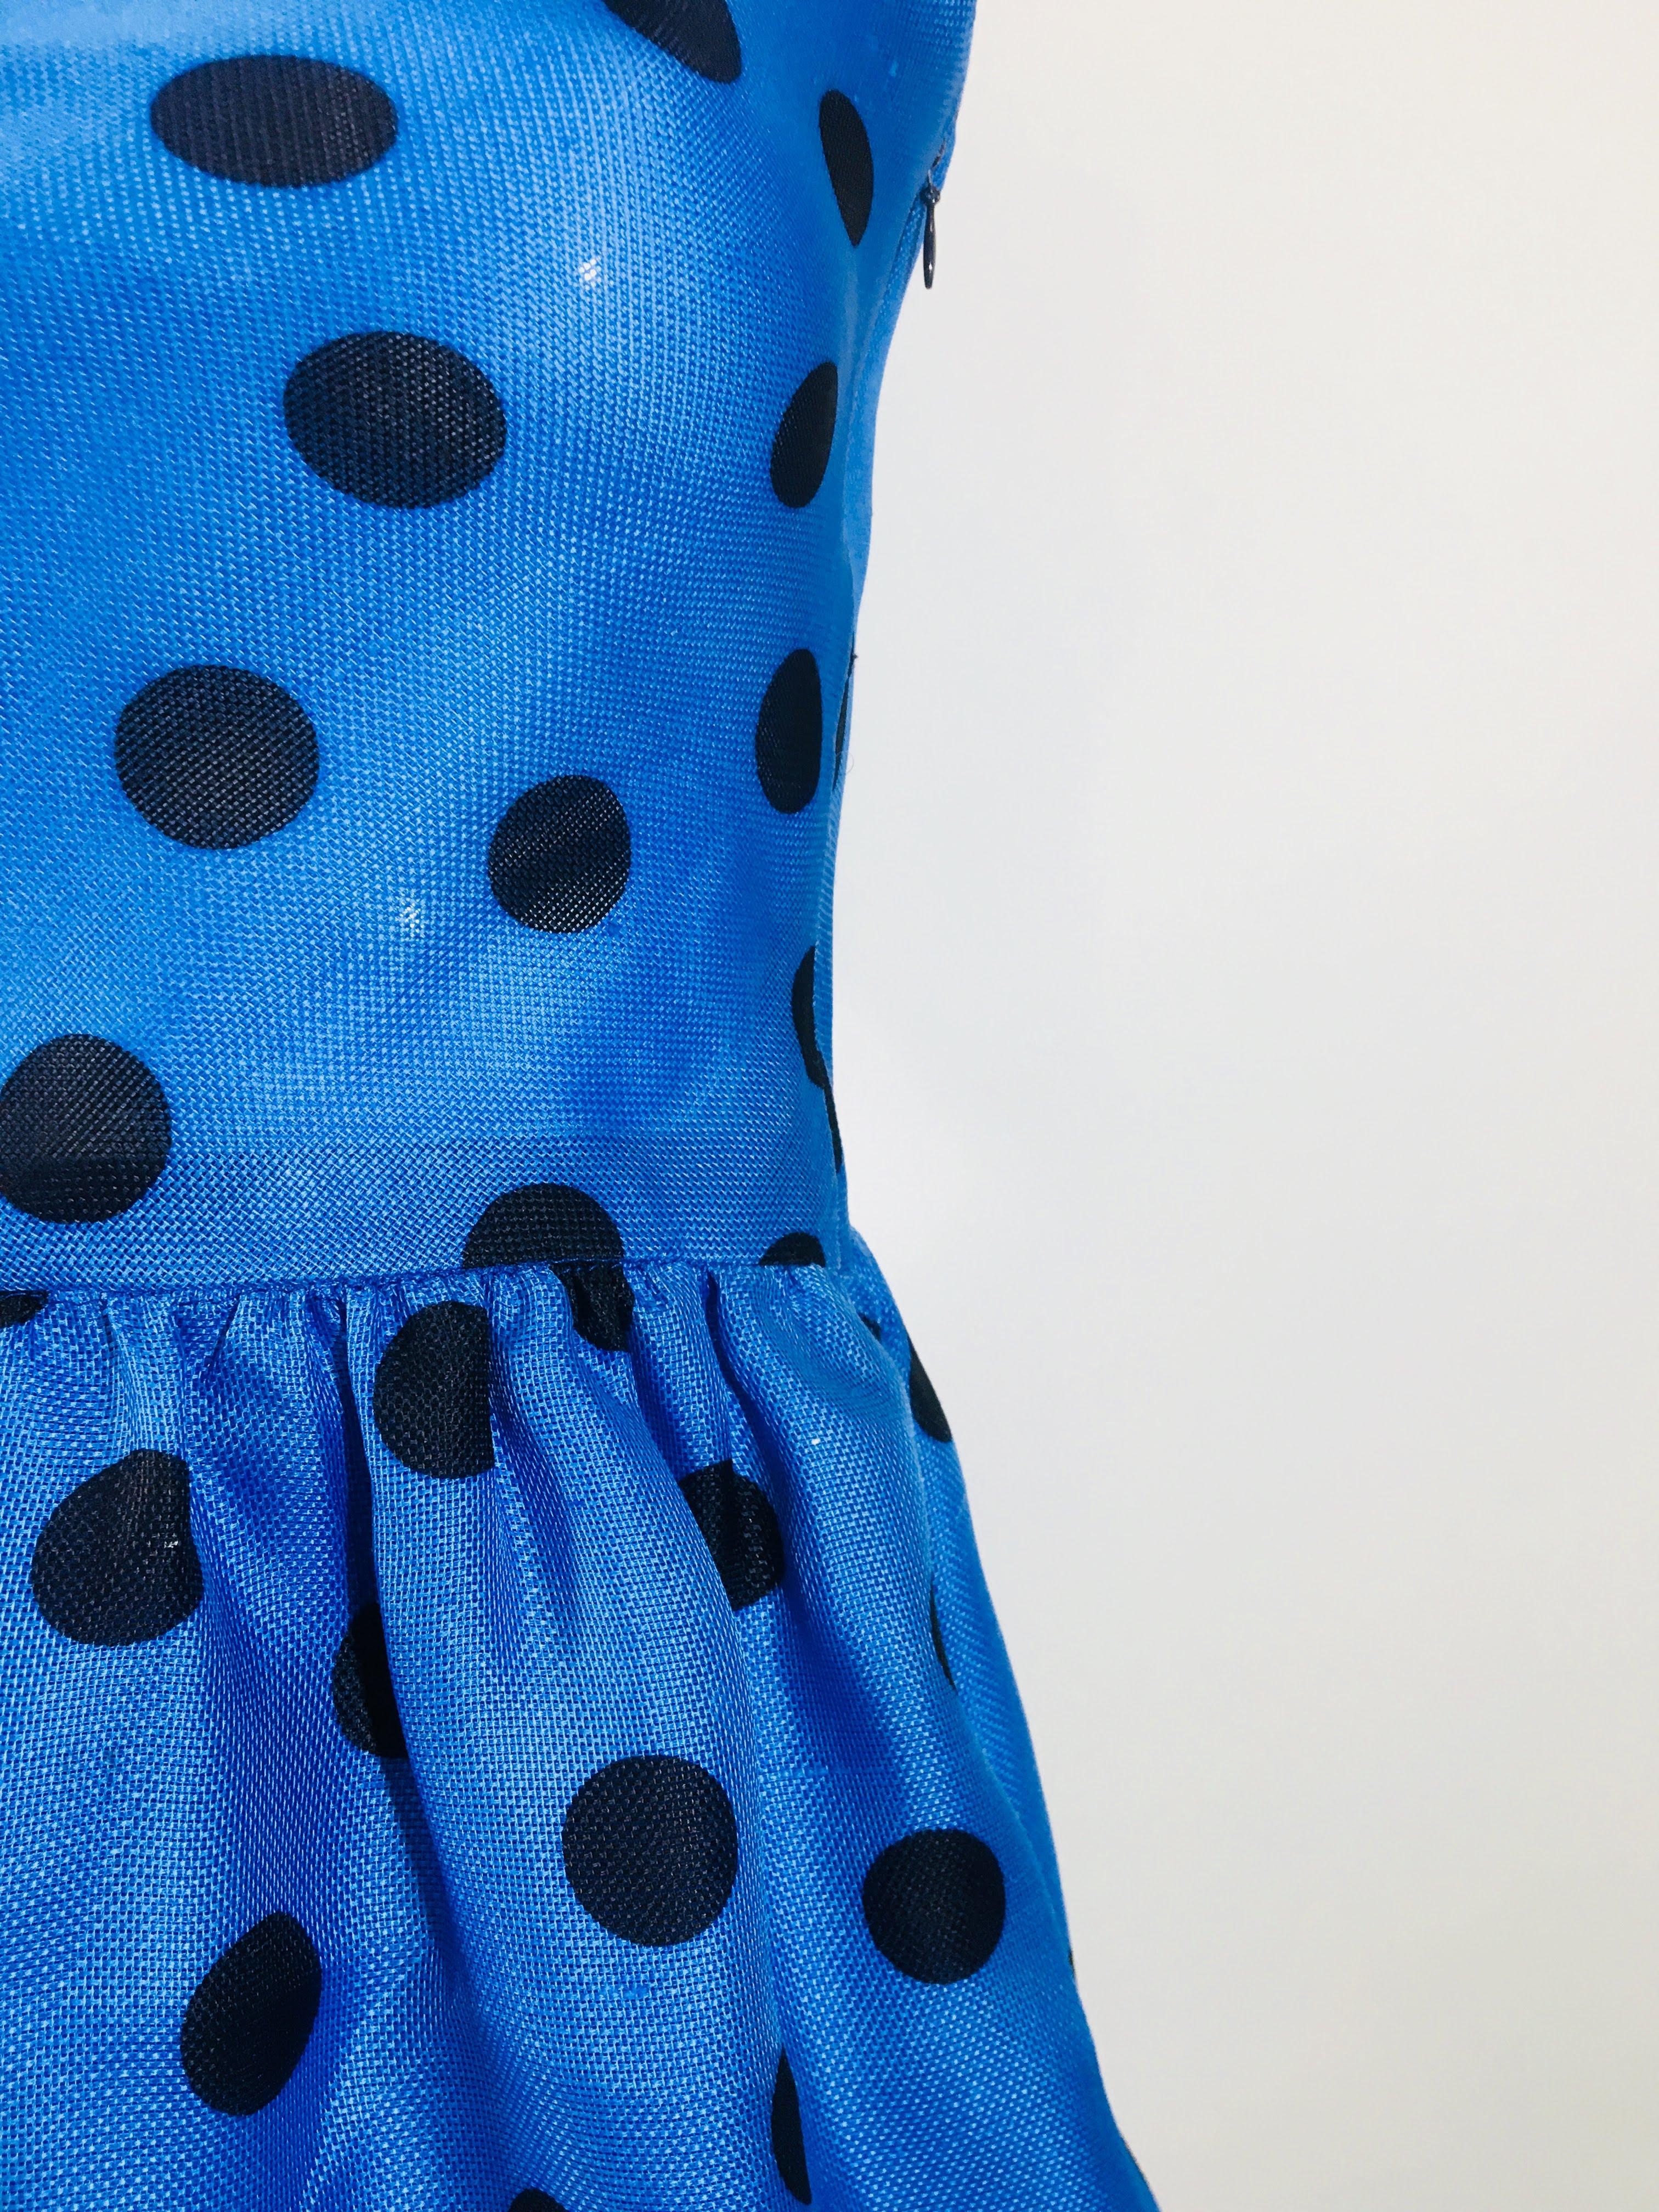 Women's Givenchy Polka Dot One Shoulder Dress